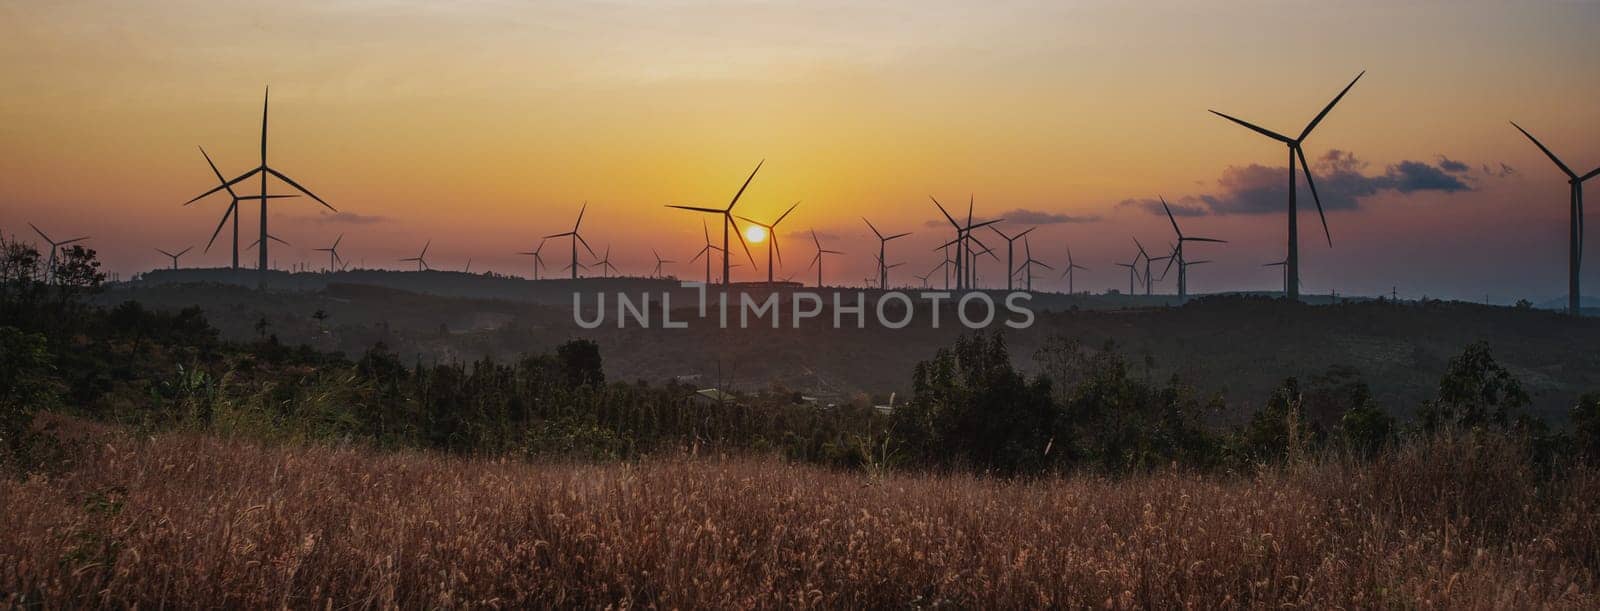 Beautiful landscape with wind turbines by GoodOlga